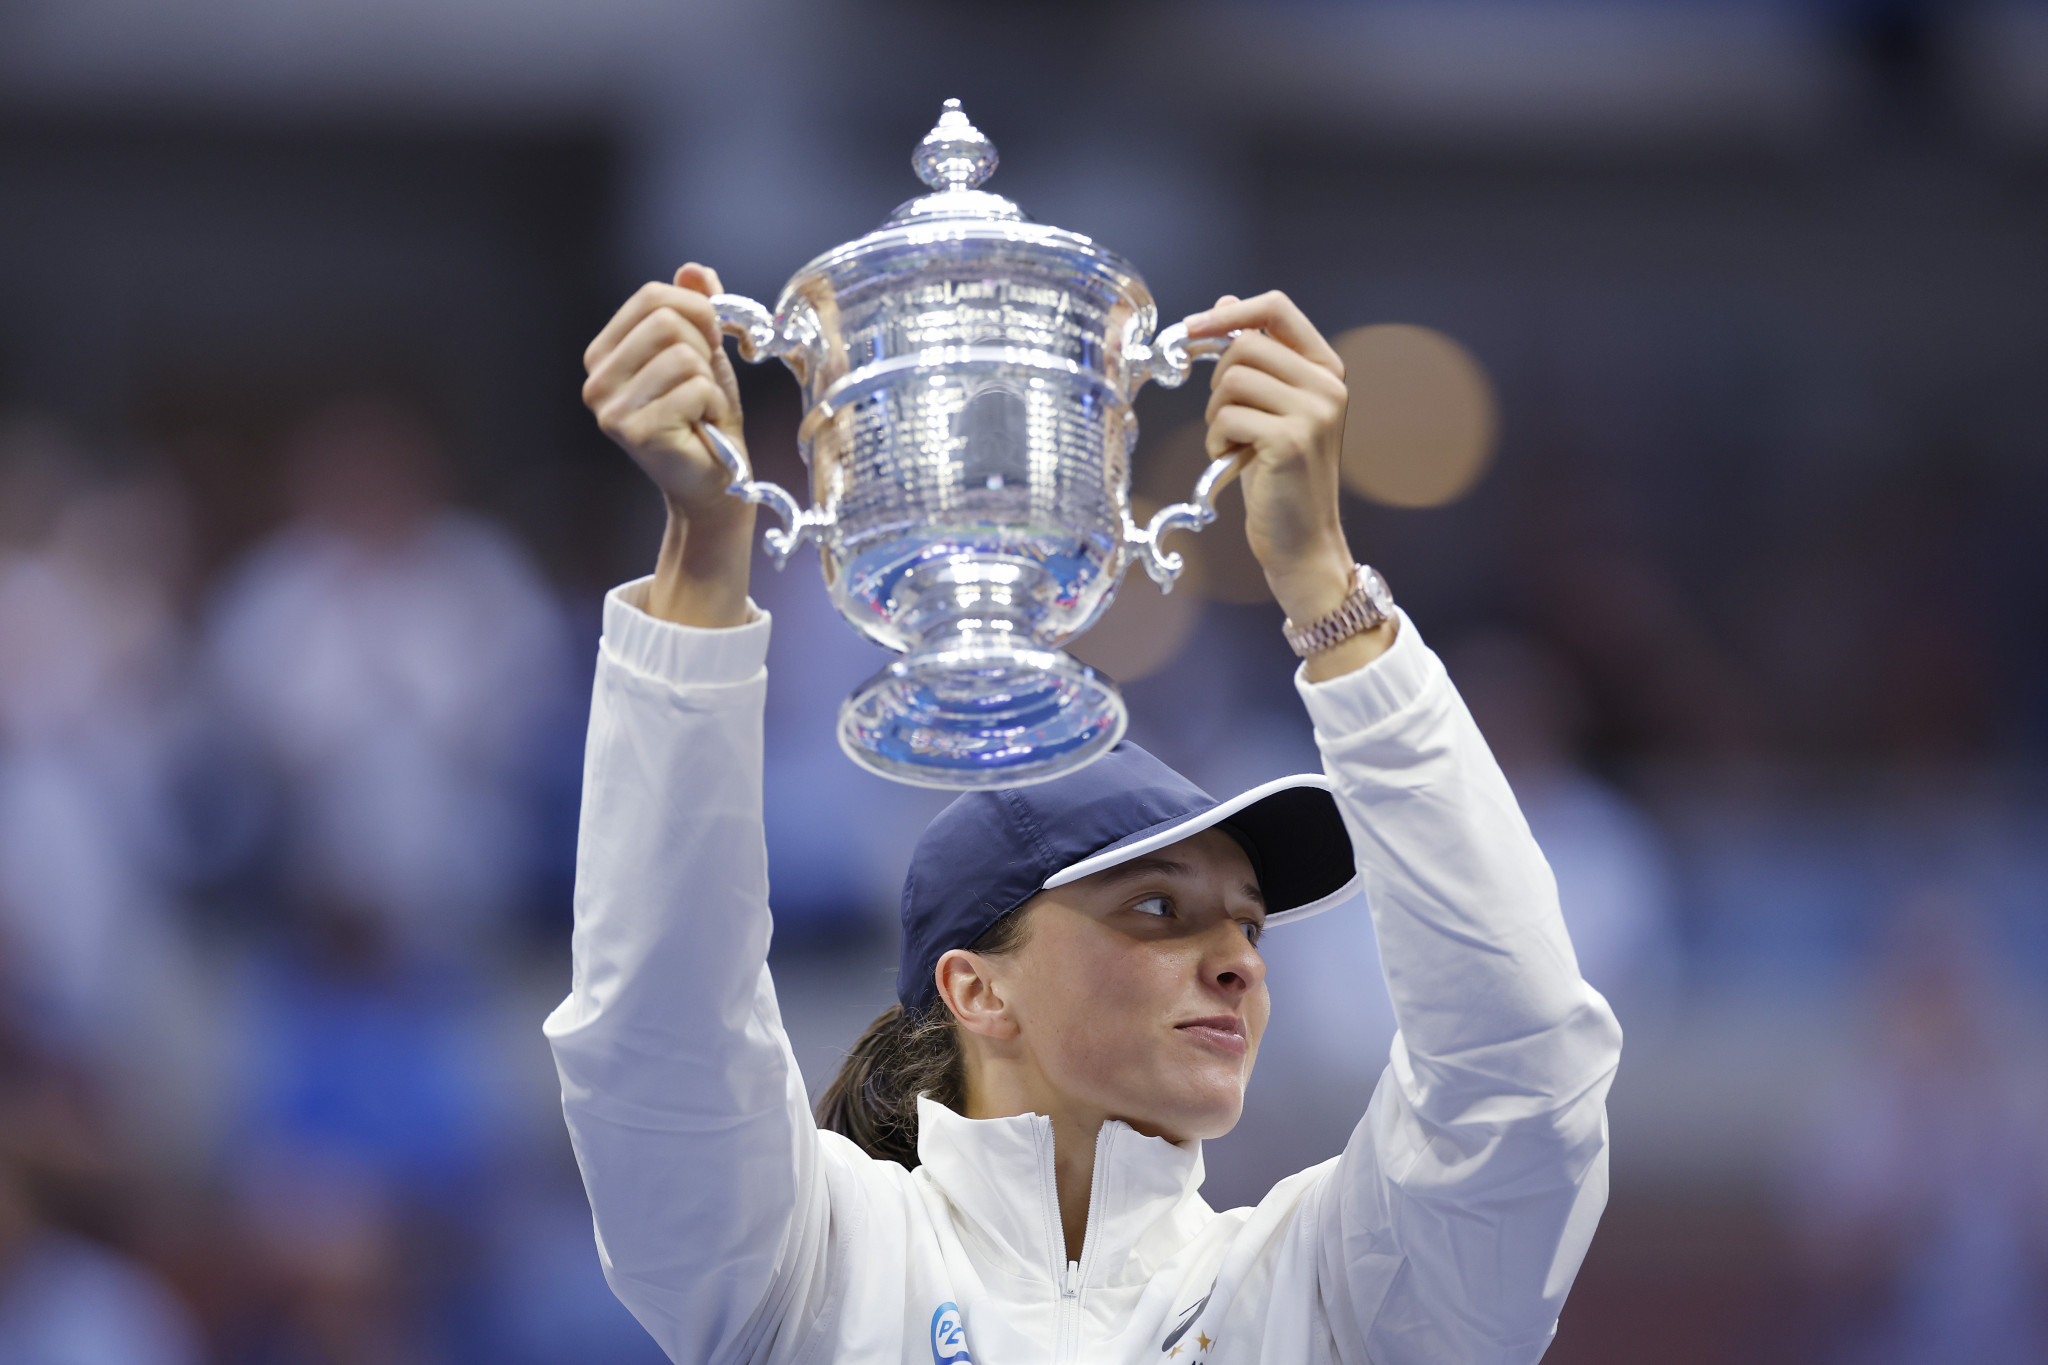 Świątek secures third Grand Slam win at US Open